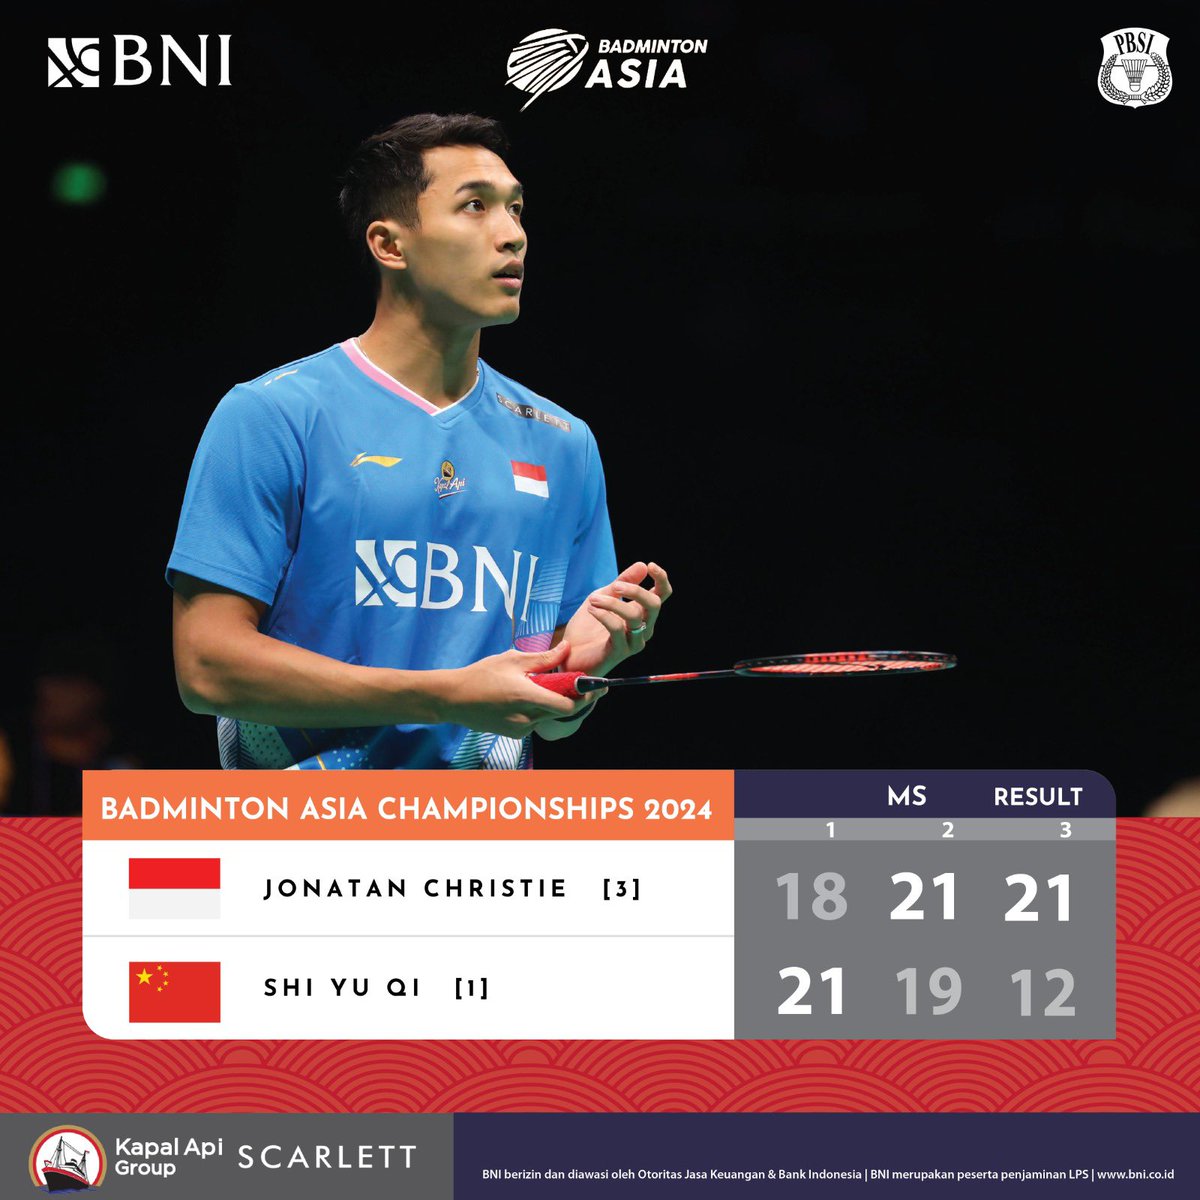 Jonatan Christie ke final Badminton Asia Championships 2024 usai menangi drama rubber game atas unggulan pertama asal Tiongkok. 

Semangat Jojo, ayo rebut juara!!💯🔥🇮🇩

#BadmintonIndonesia
#badmintonasiachampionships2024
#KitaIndonesia
#MenjagaMerahPutih